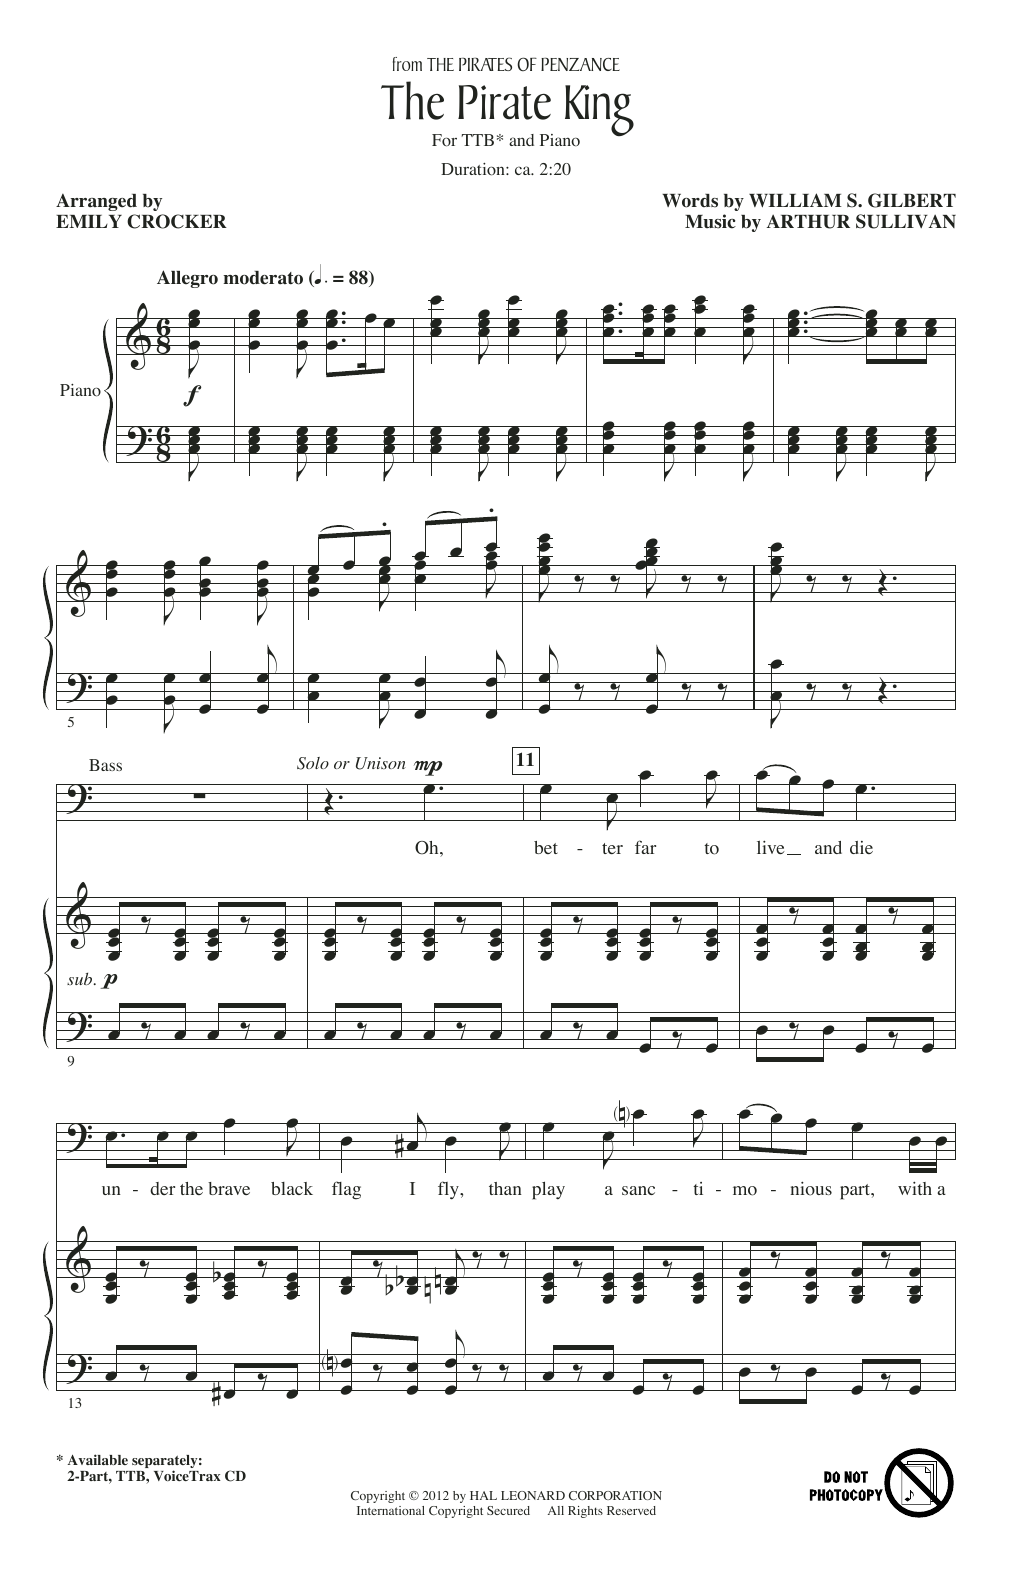 Gilbert & Sullivan The Pirate King sheet music notes and chords arranged for TTBB Choir